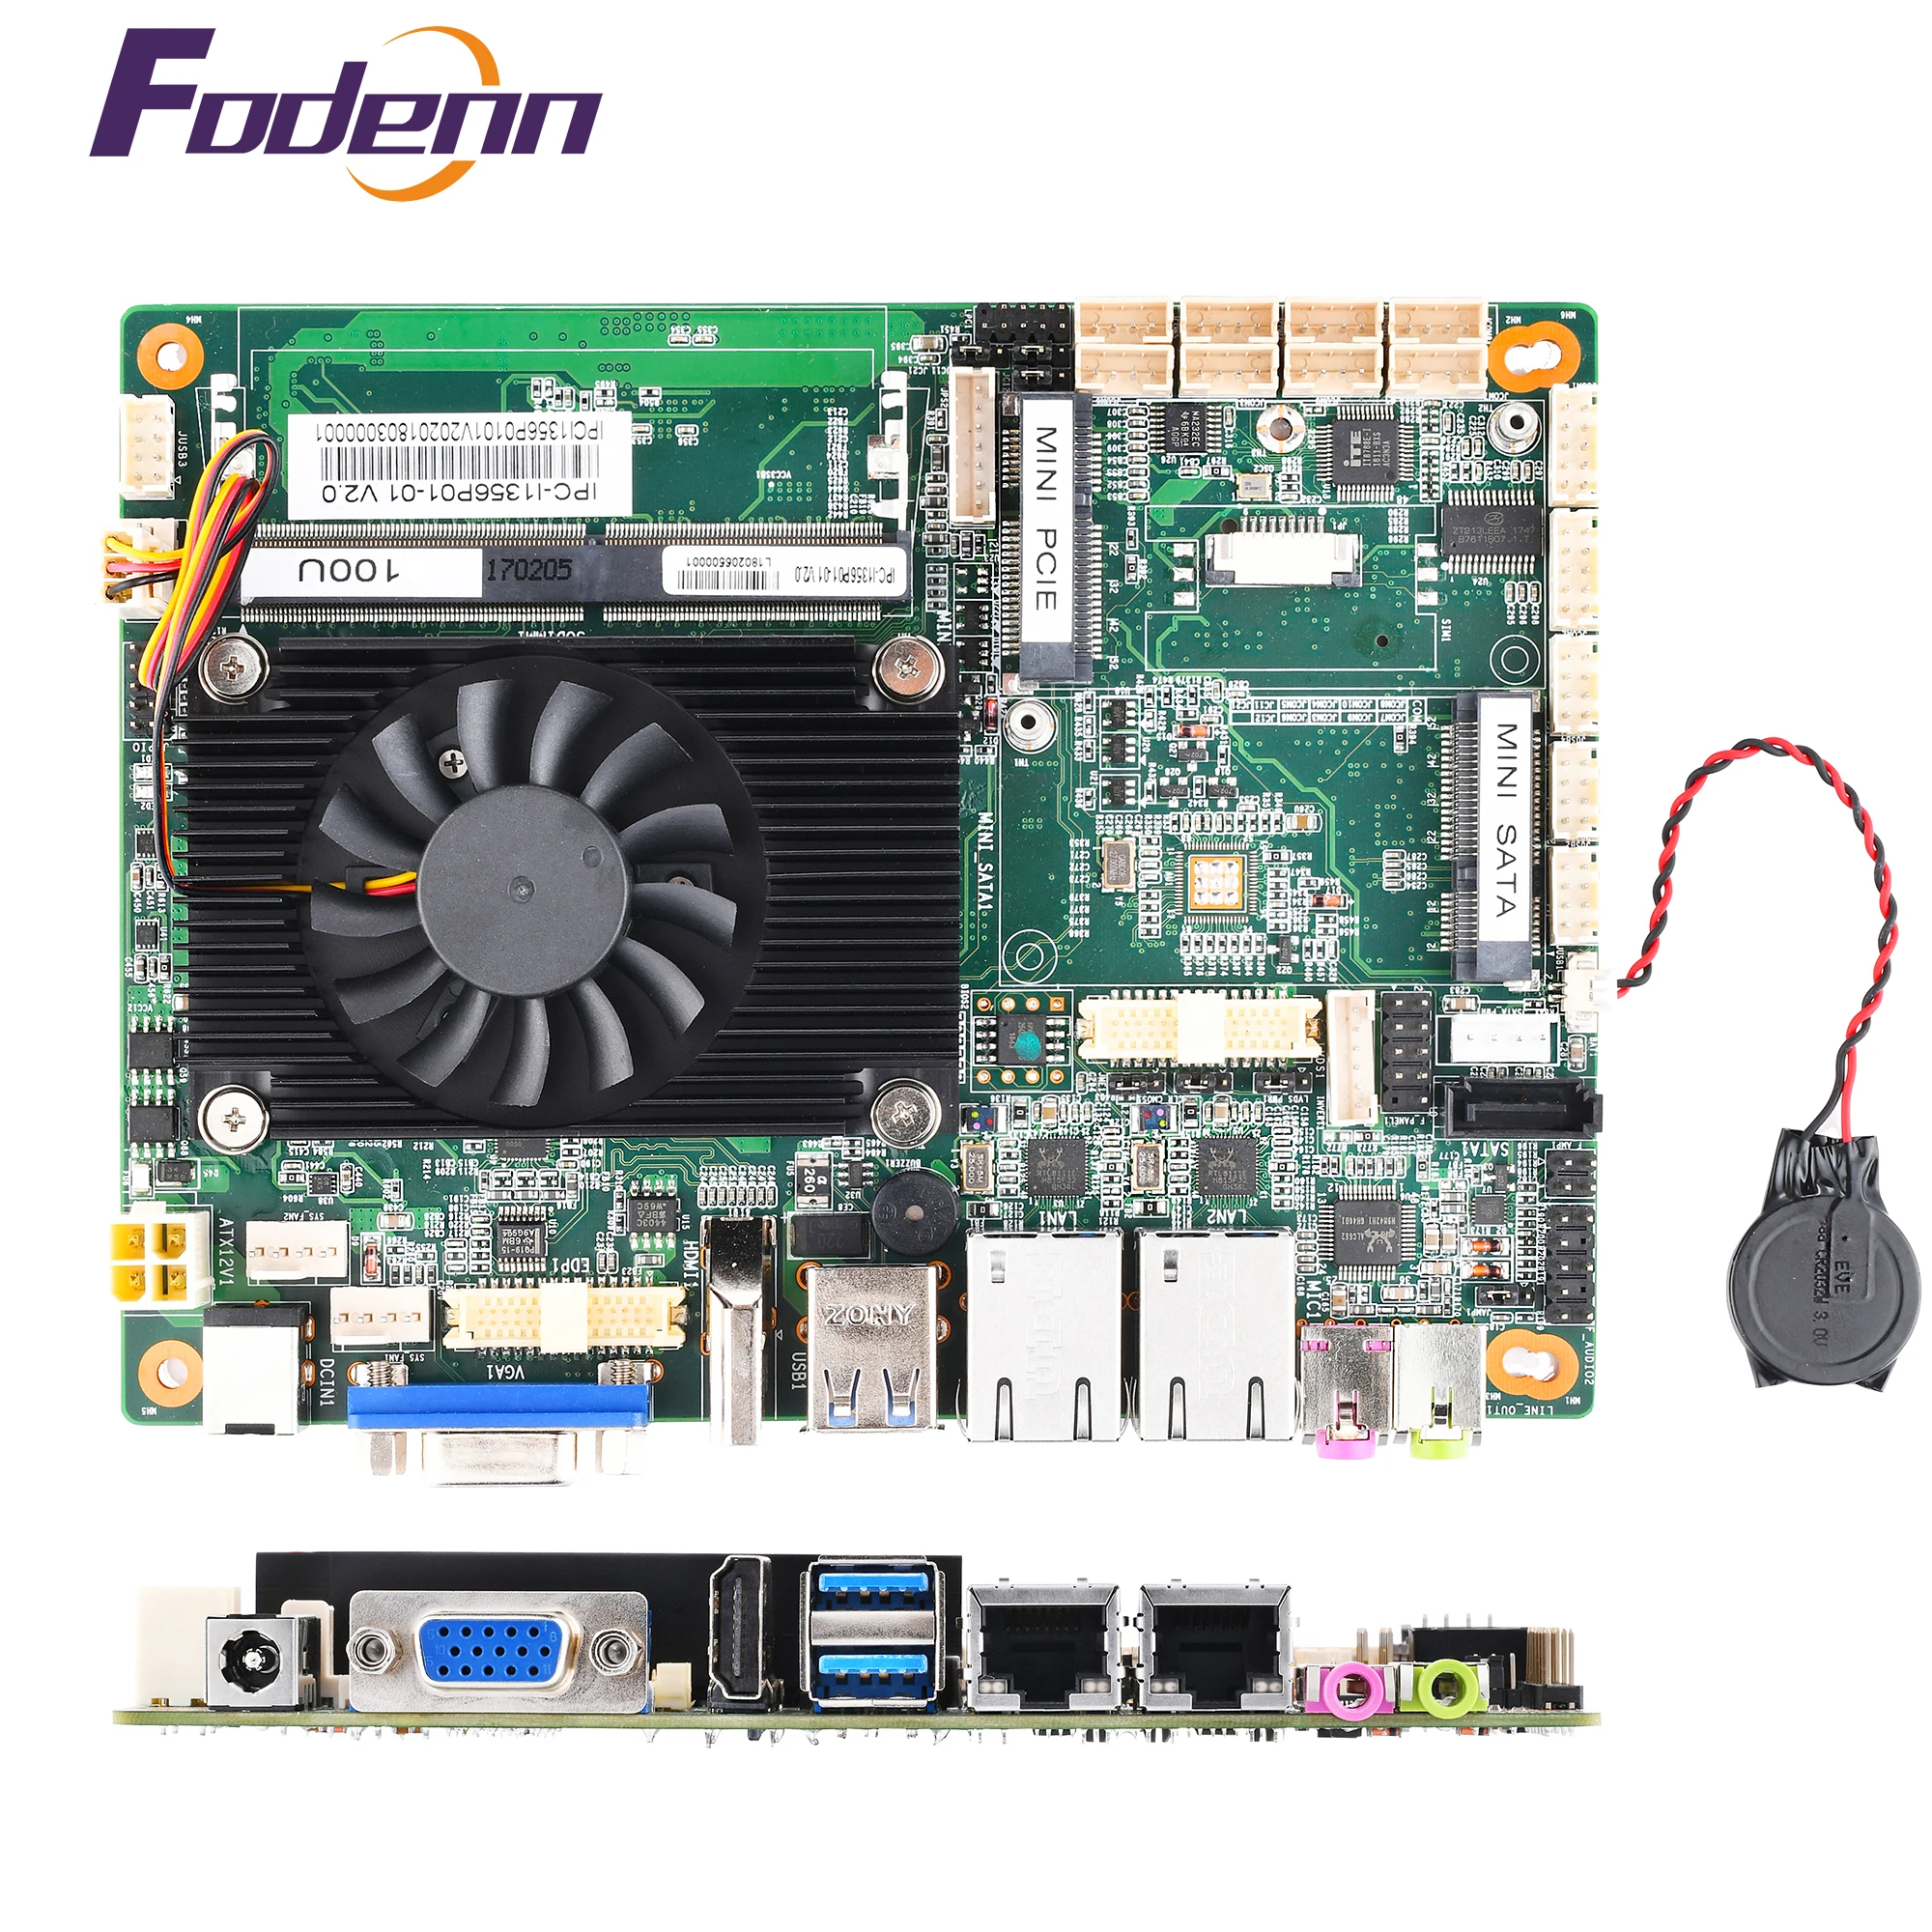 

Fodenn Intel Skylake-U i3 fanless industrial notebook motherboard with Onboard SIM card slot